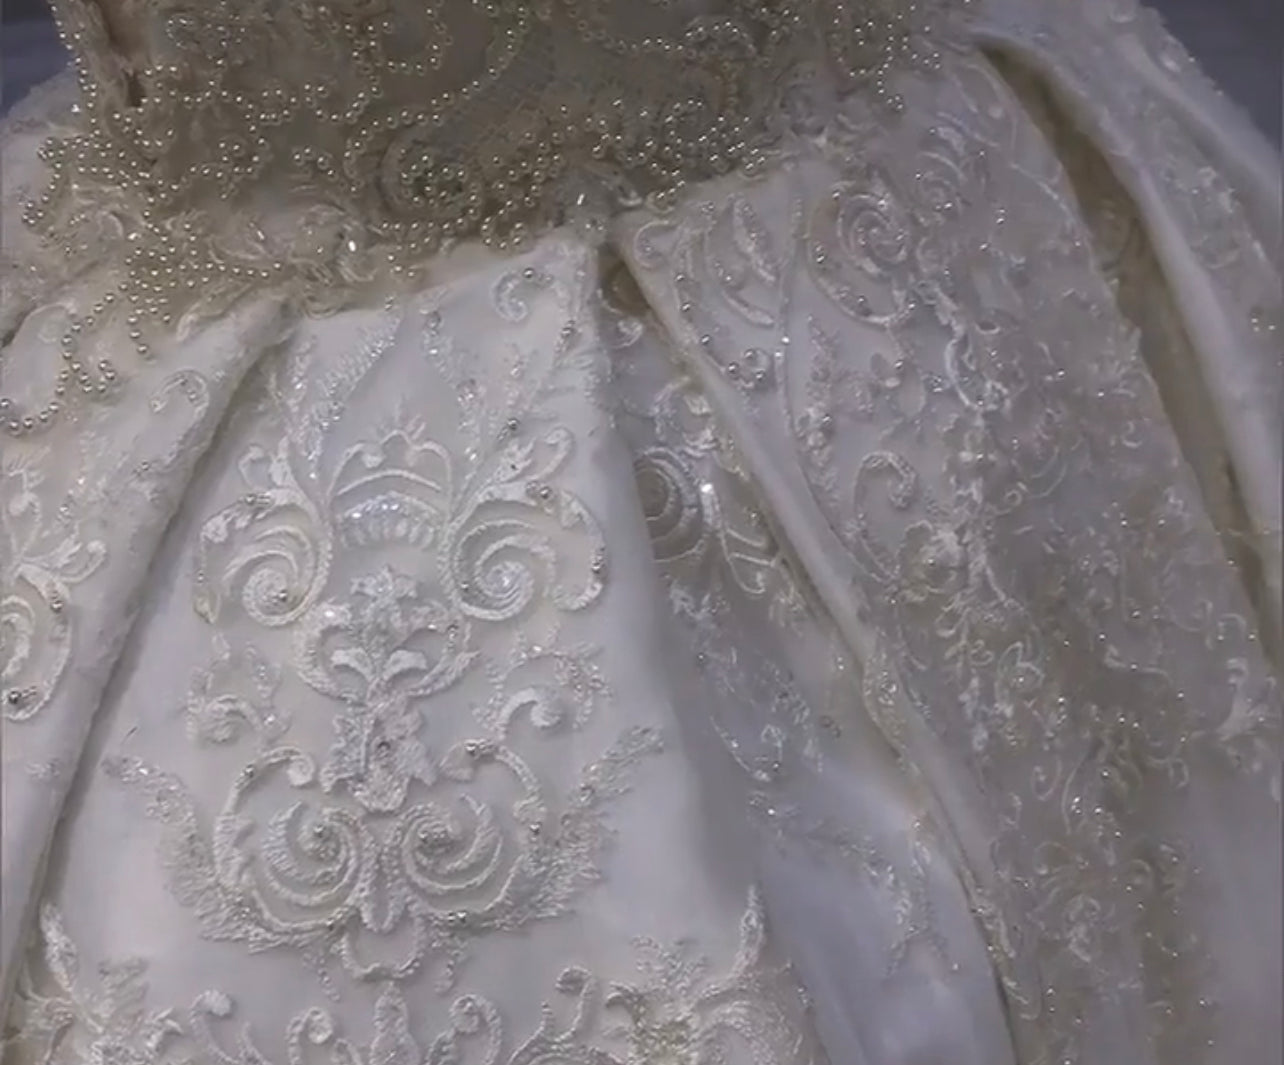 AM562 Cap Sleeve Low Cut V-neck Lace Applique Backless Wedding Dress